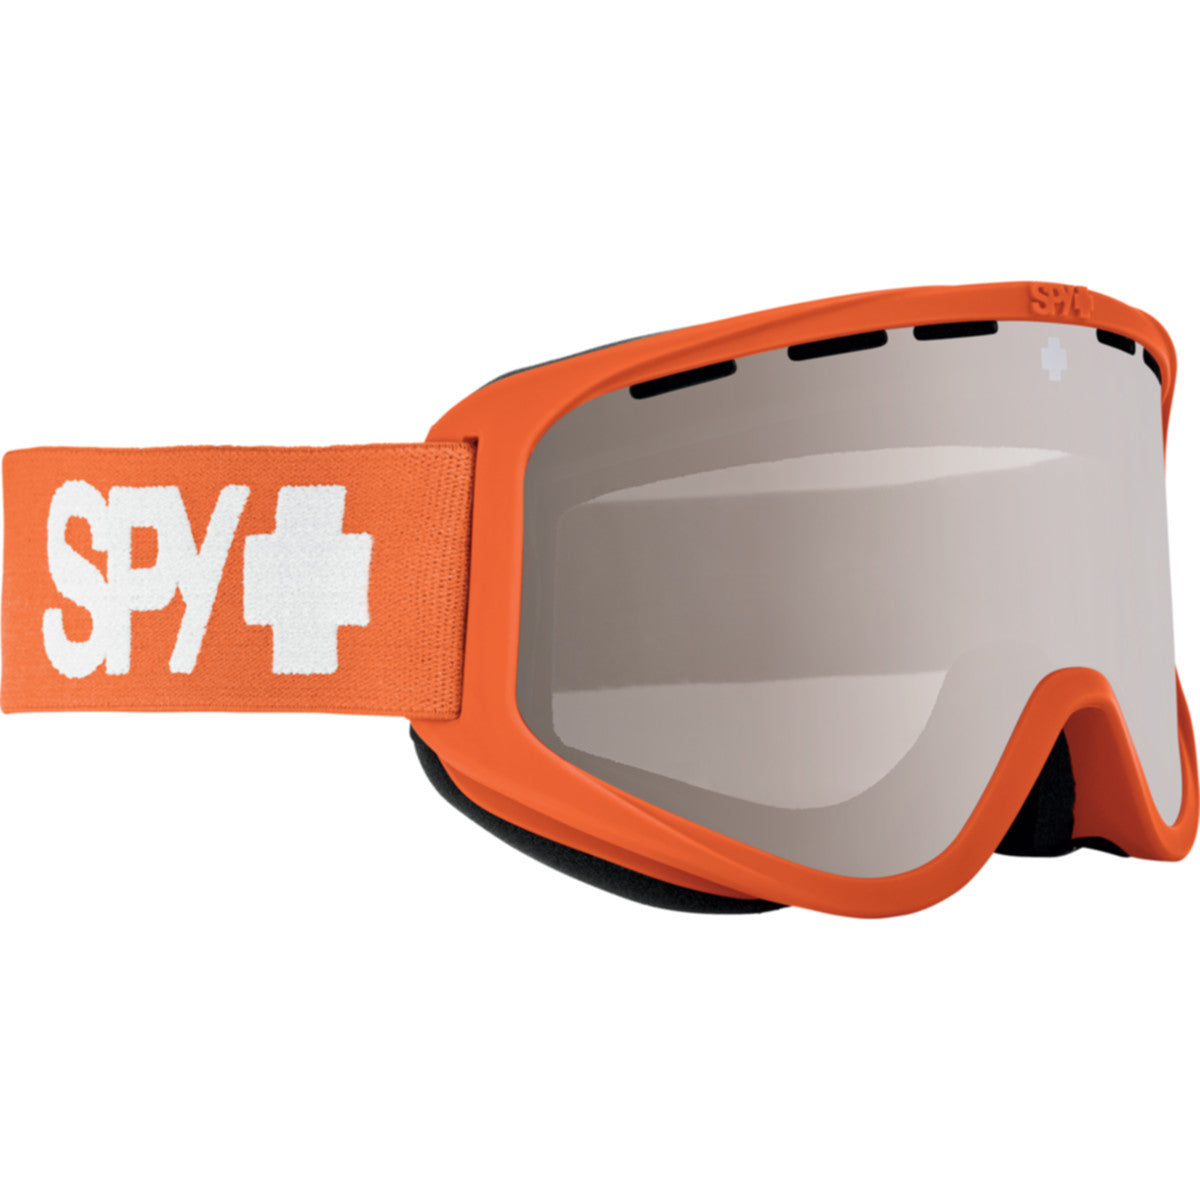 Spy WOOT Goggles  Matte Orange Small, Small-Medium, Medium, Medium-Large